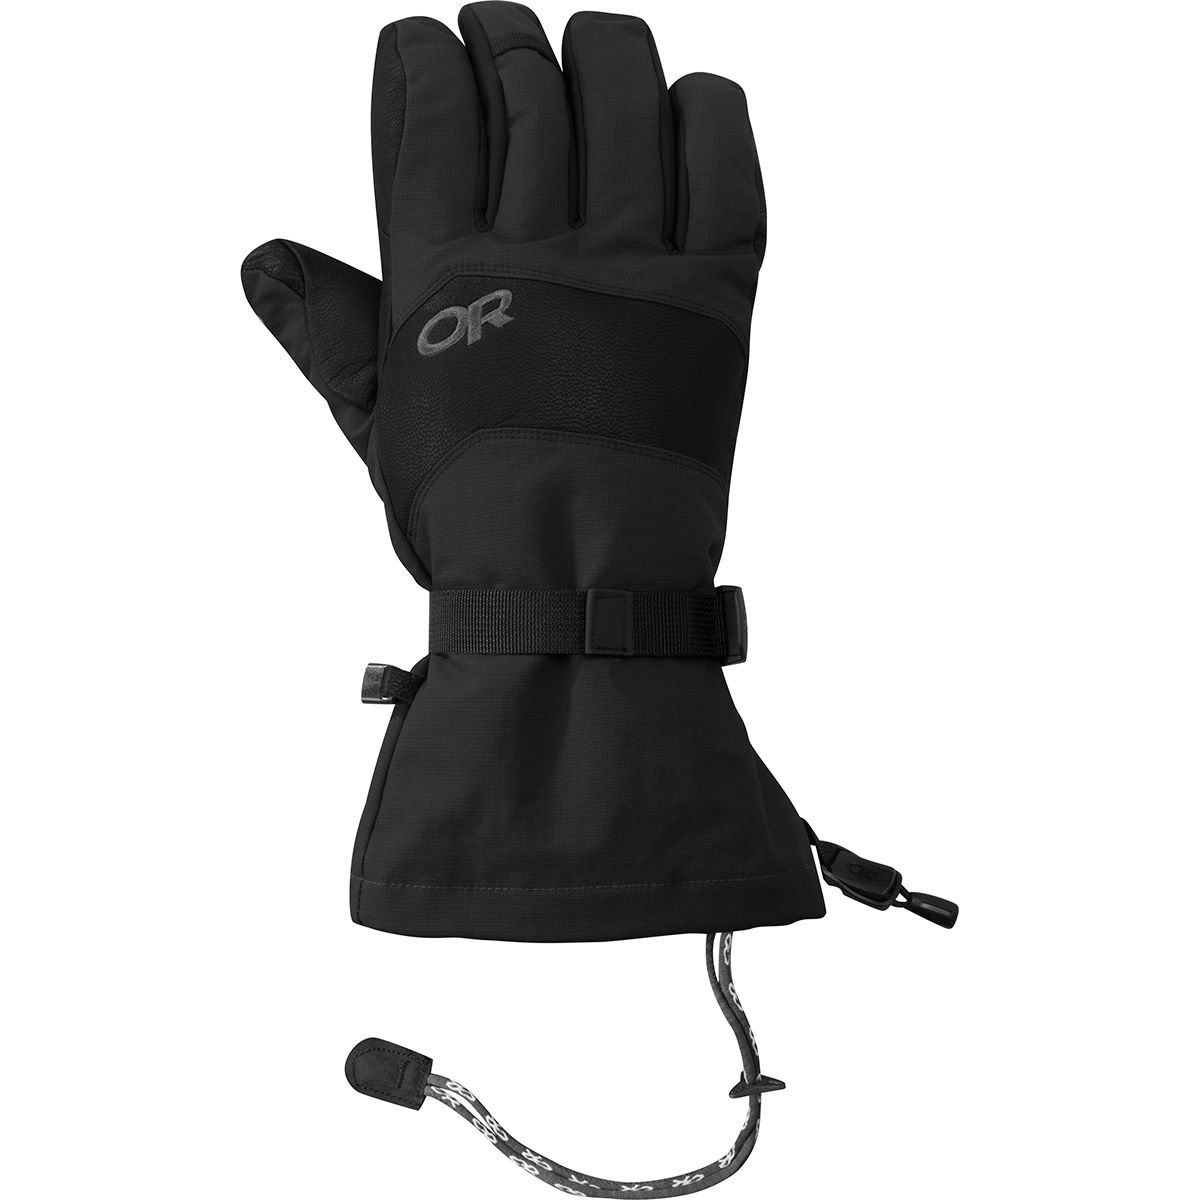 Outdoor Research HighCamp Glove - Men's